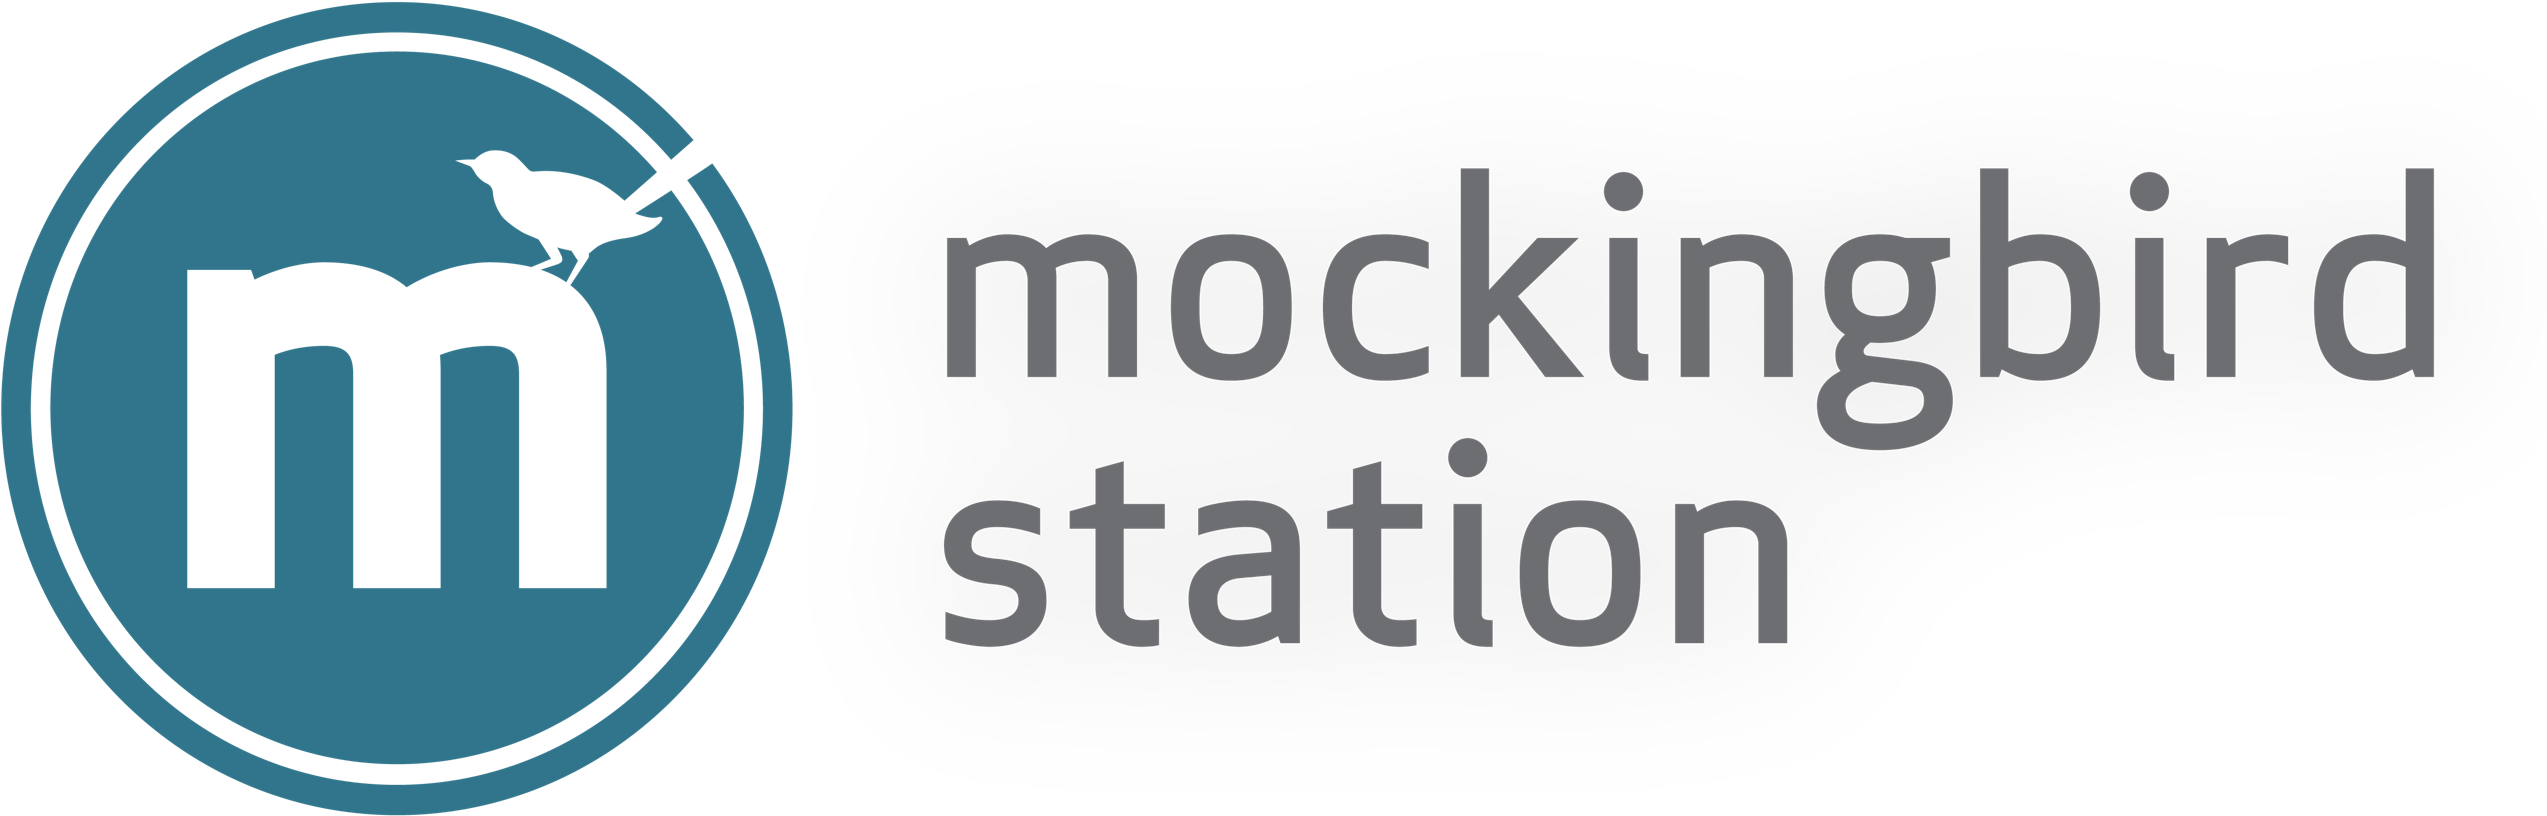 Mockingbird Station Presents The Mockingbird Music - Signage (2639x956), Png Download